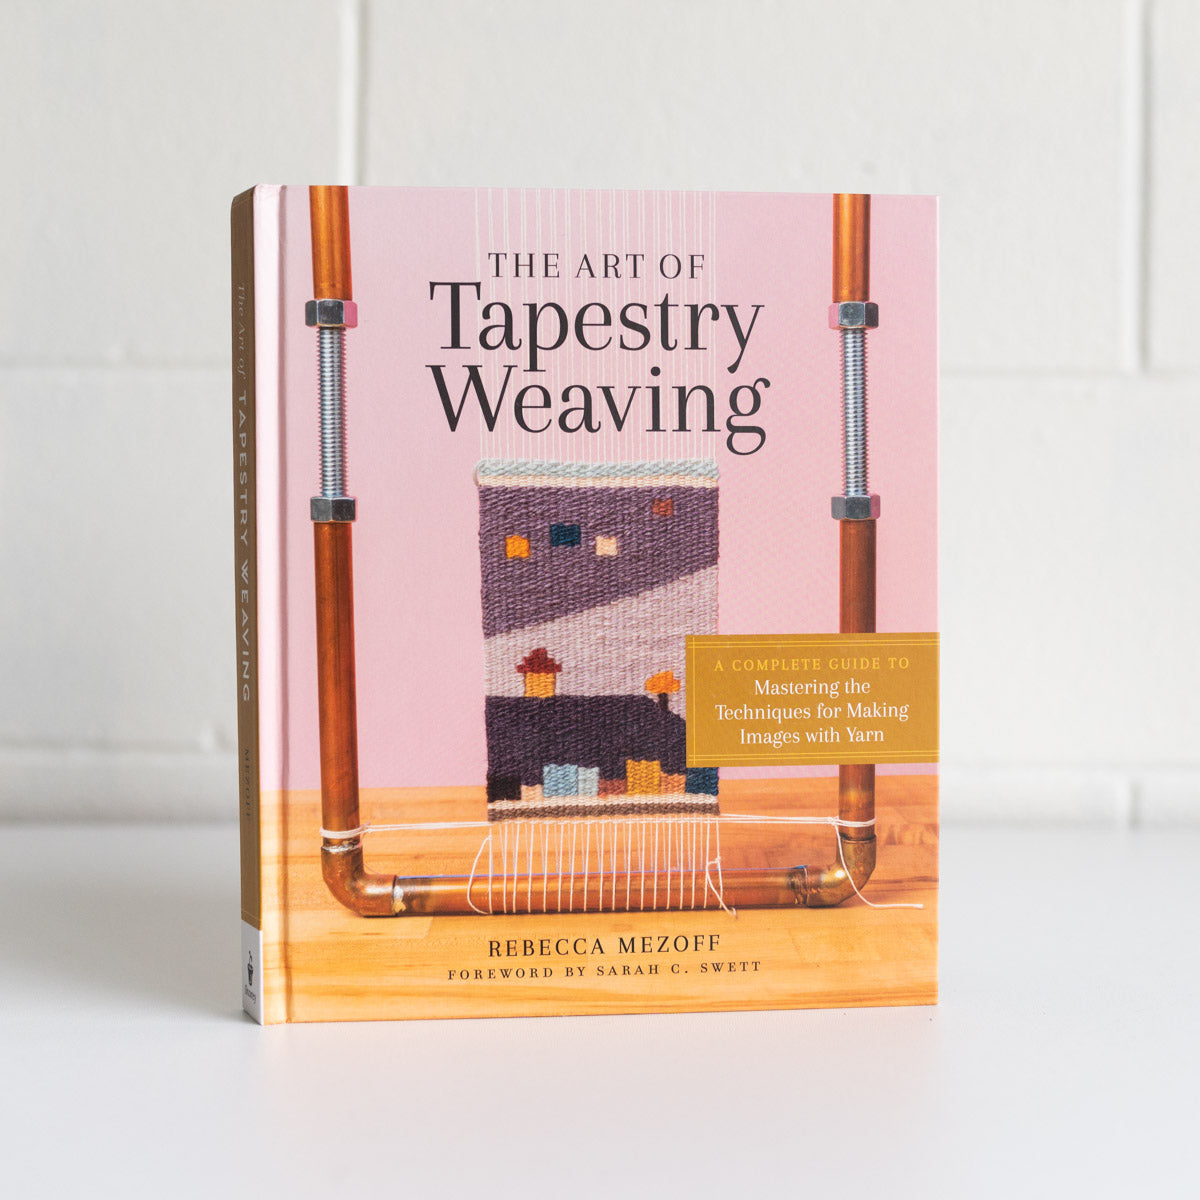 The Art of Tapestry Weaving